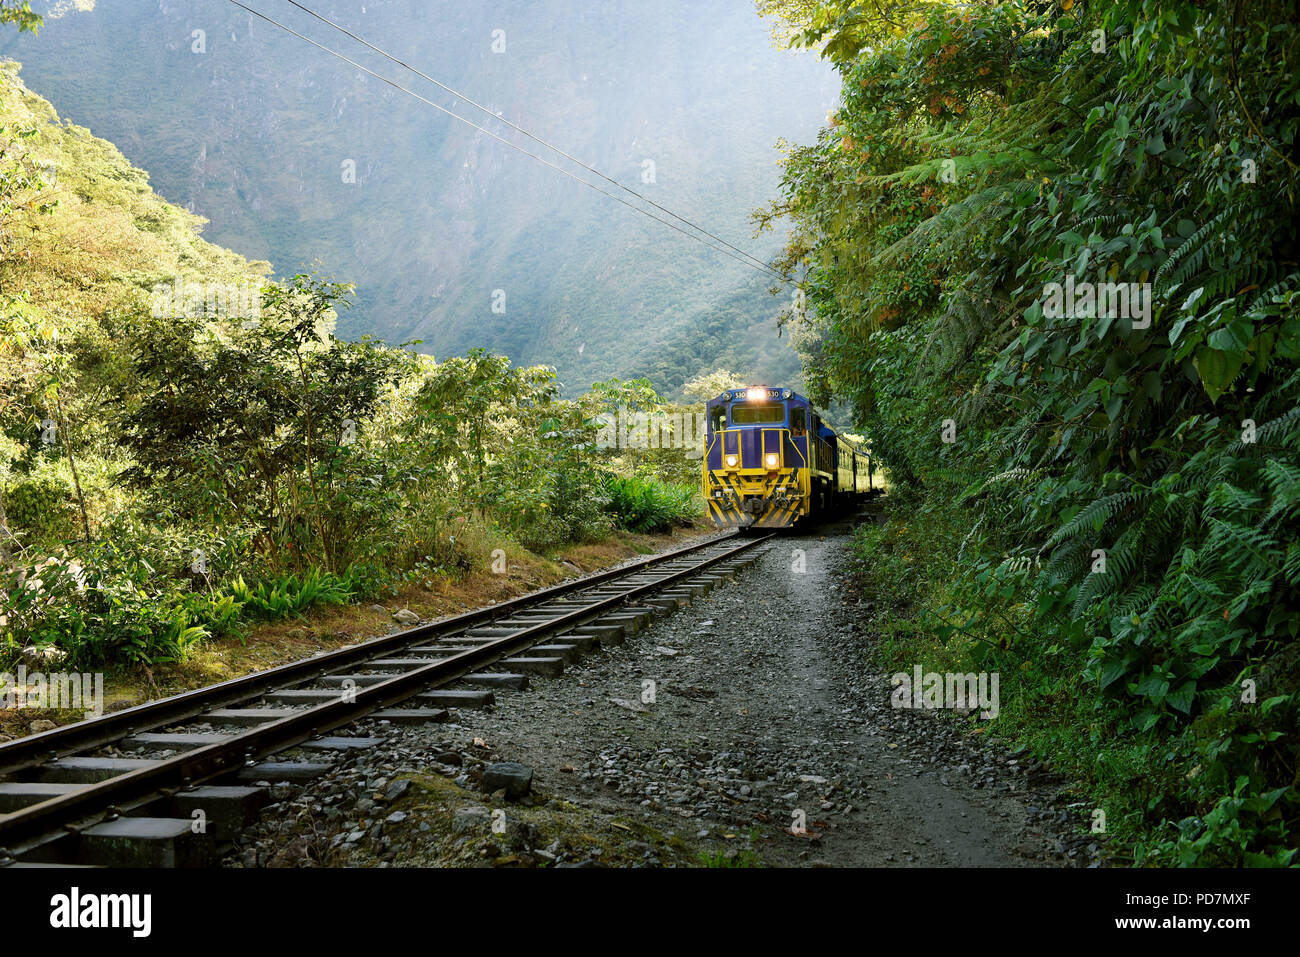 Approaching train: Peru Rail to Aguas Calientes (the nearest town to visit the Inca ruins of Machu Picchu). Urubamba River Valley, Peru. Jun 2018 Stock Photo